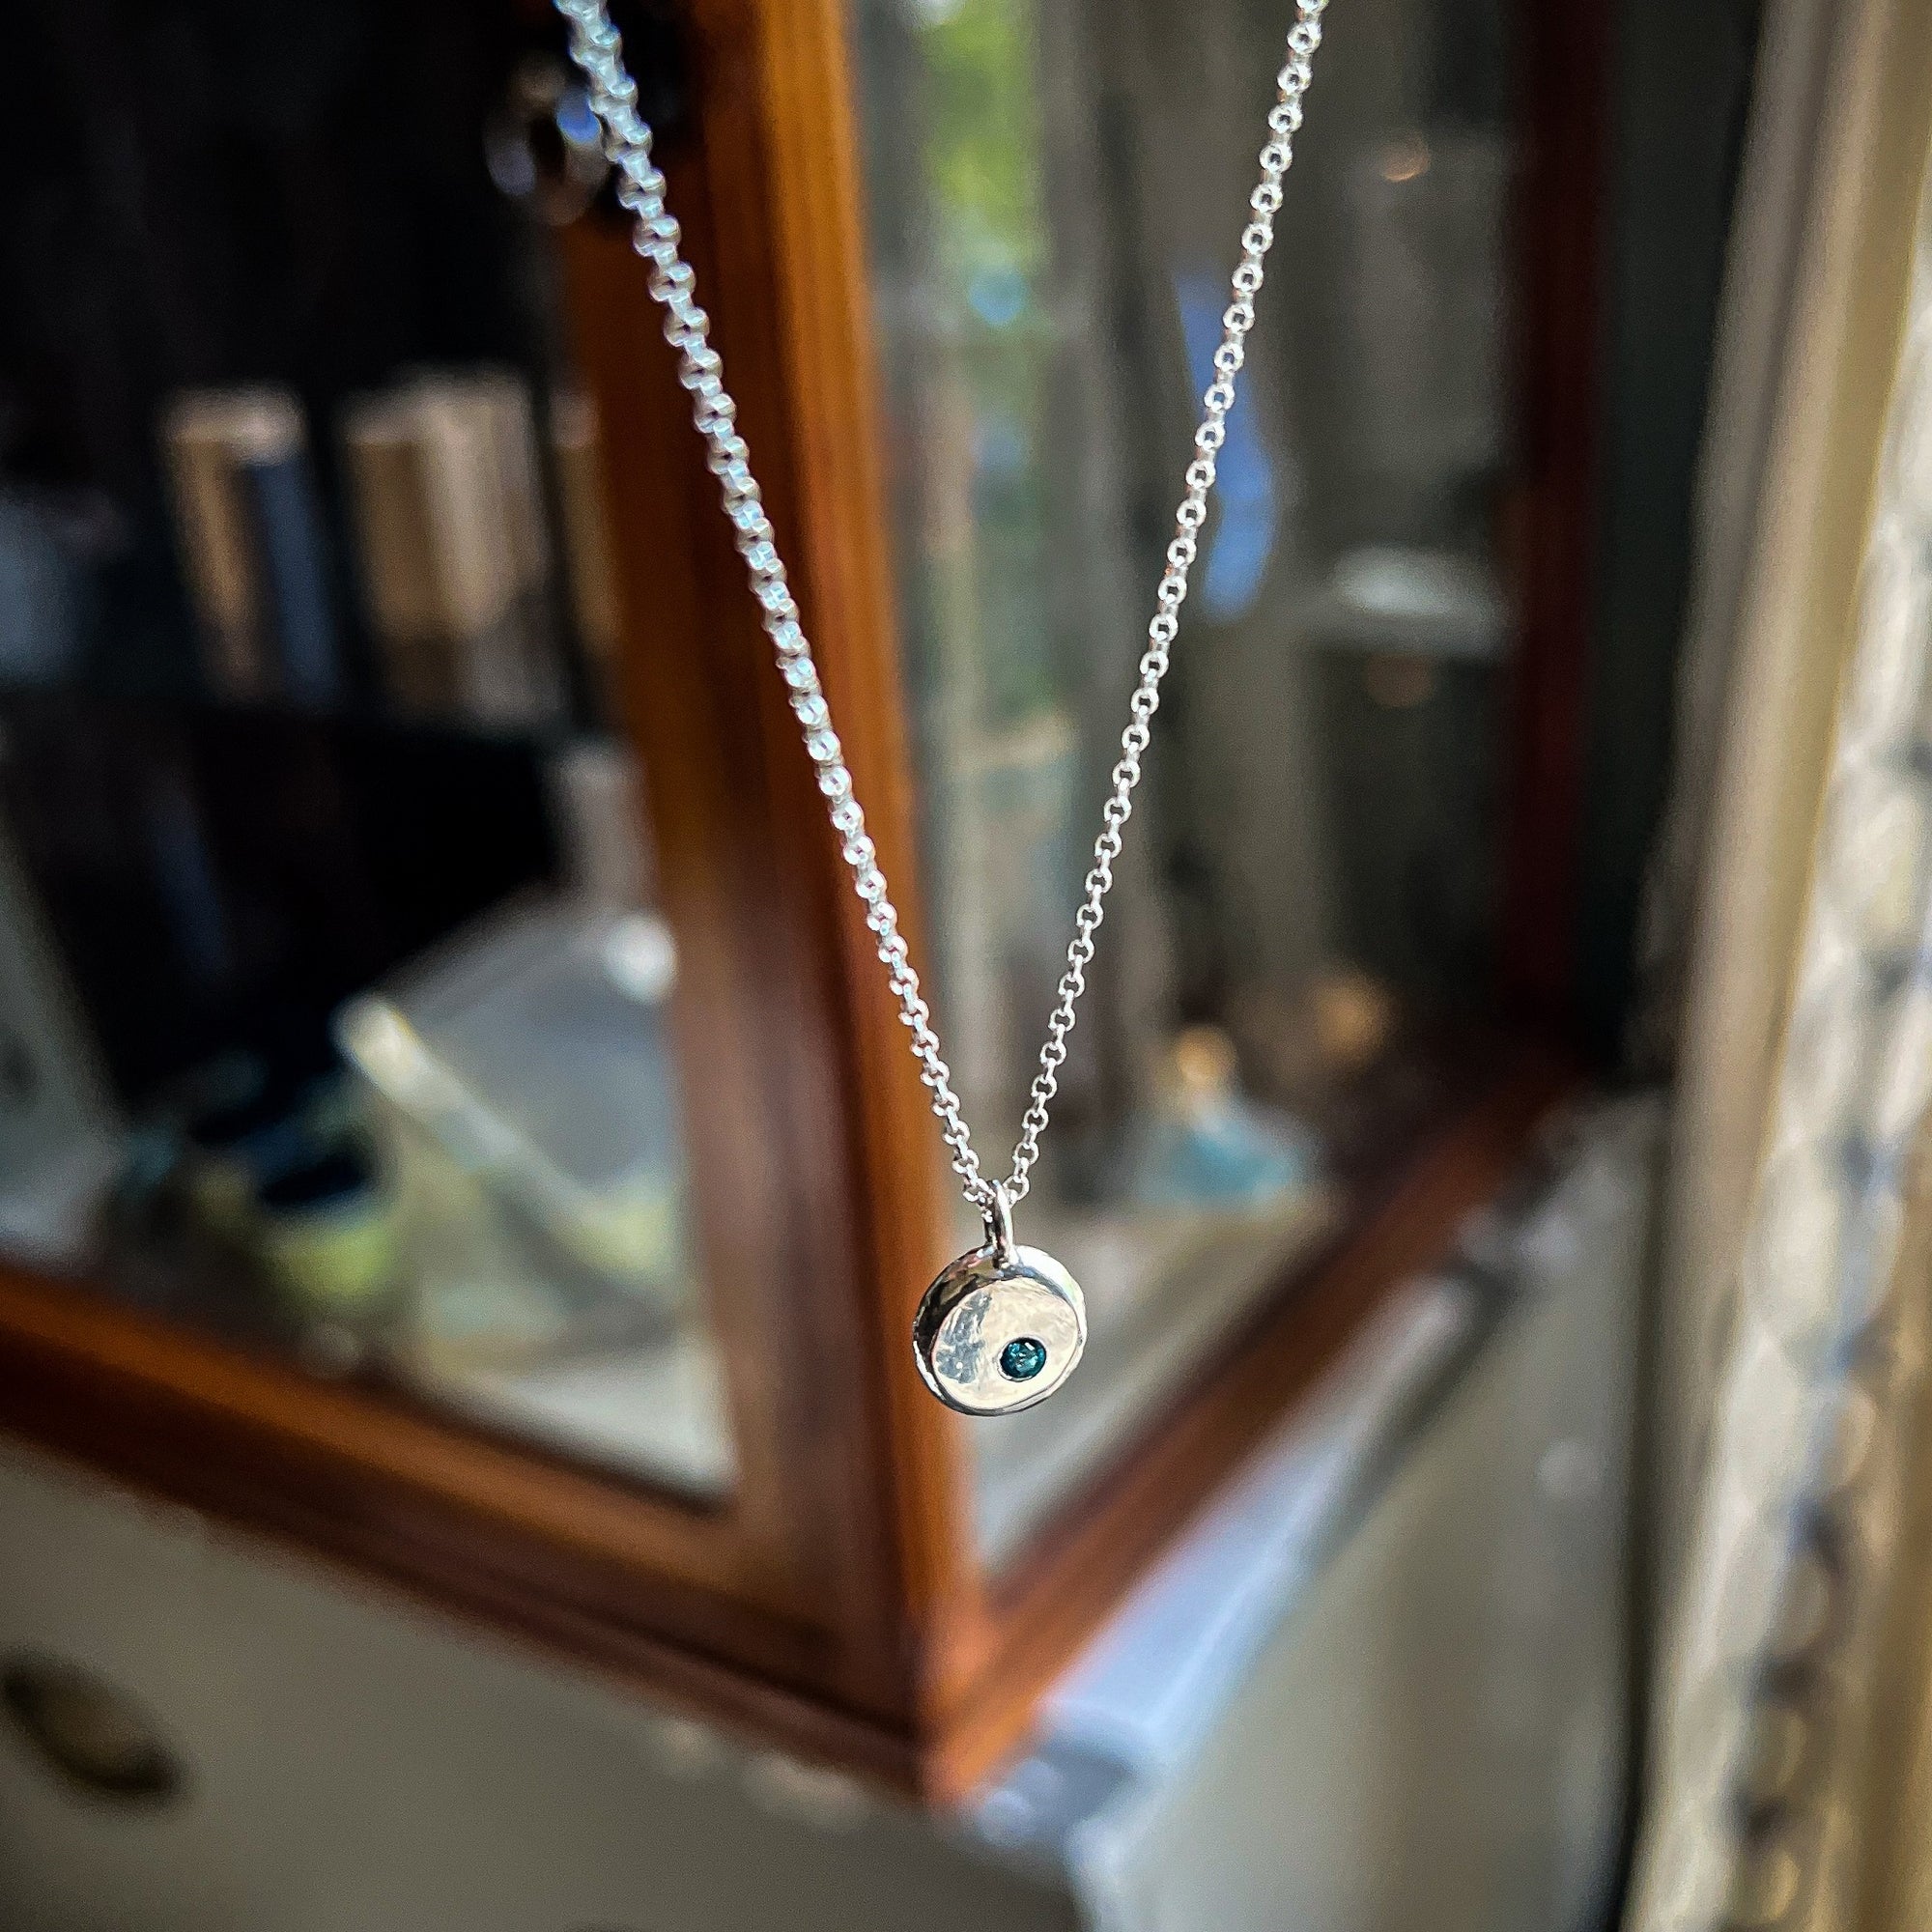 3mm London Blue Topaz in a sterling silver pendant